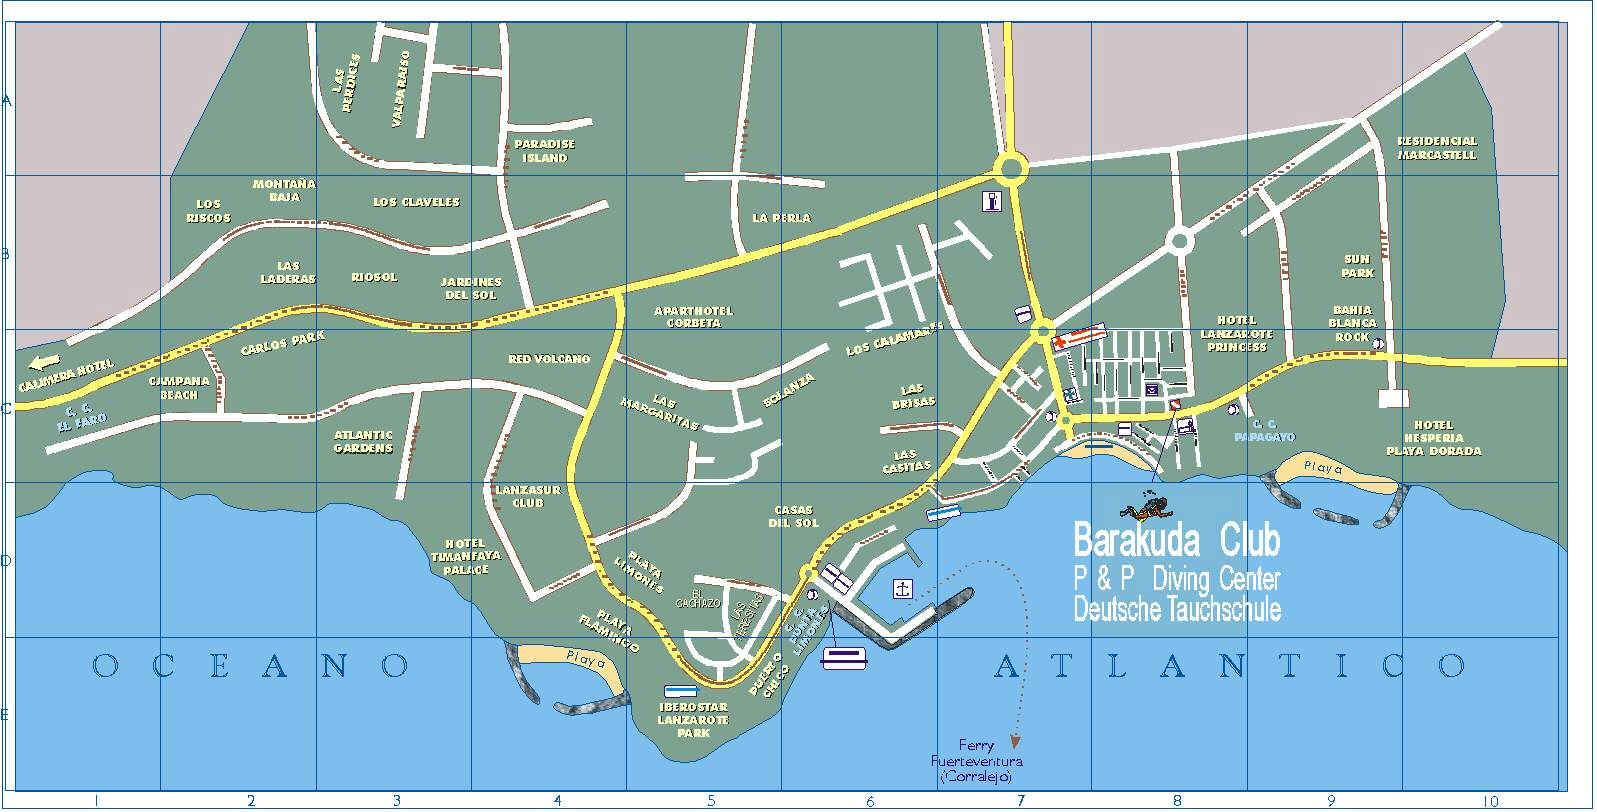 P&P Playa Blanca - Lanzarote - Karte Gross - Tauchclub Alpha Tauchen